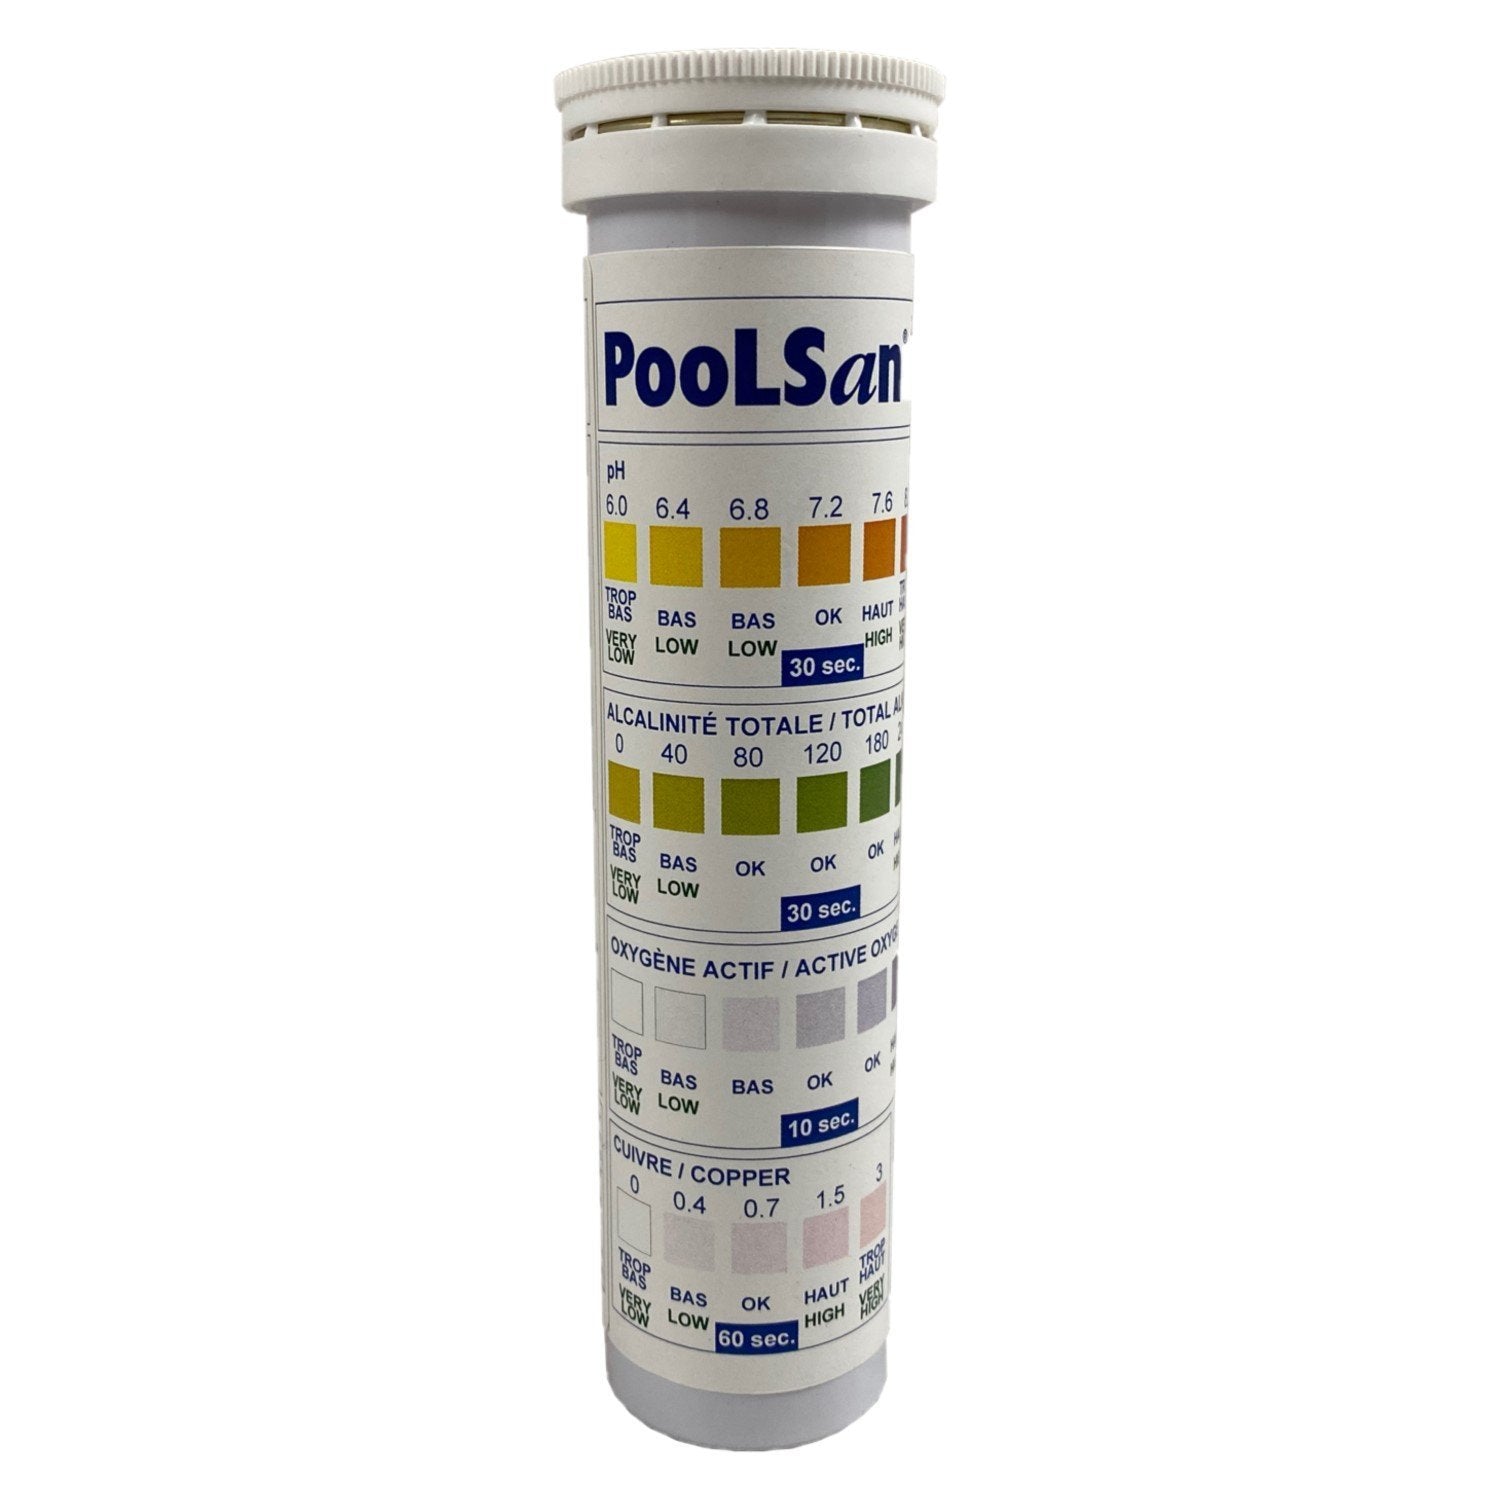 Kit analyse eau piscine Pooltester 3 en 1 Poolsan